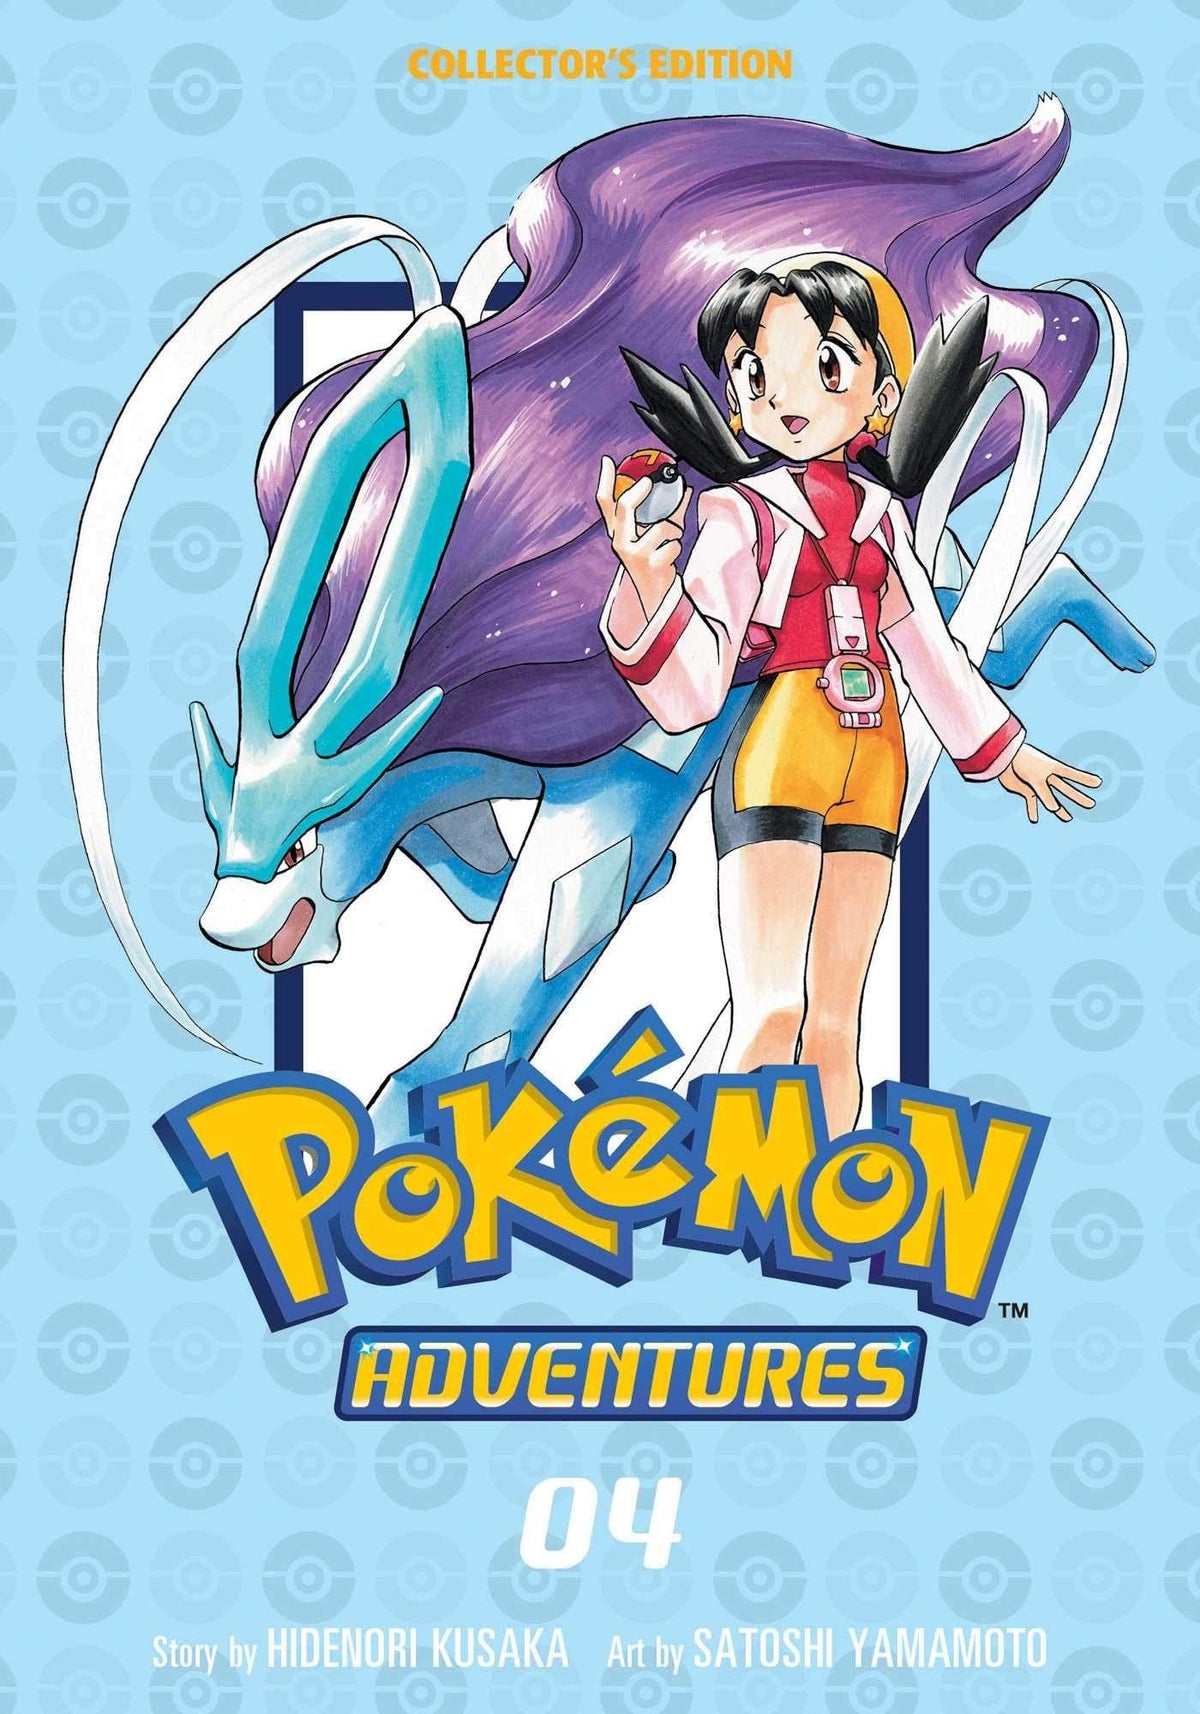 MANGA Viz Kids Pokemon Adventures PLATINUM 1-11 TP